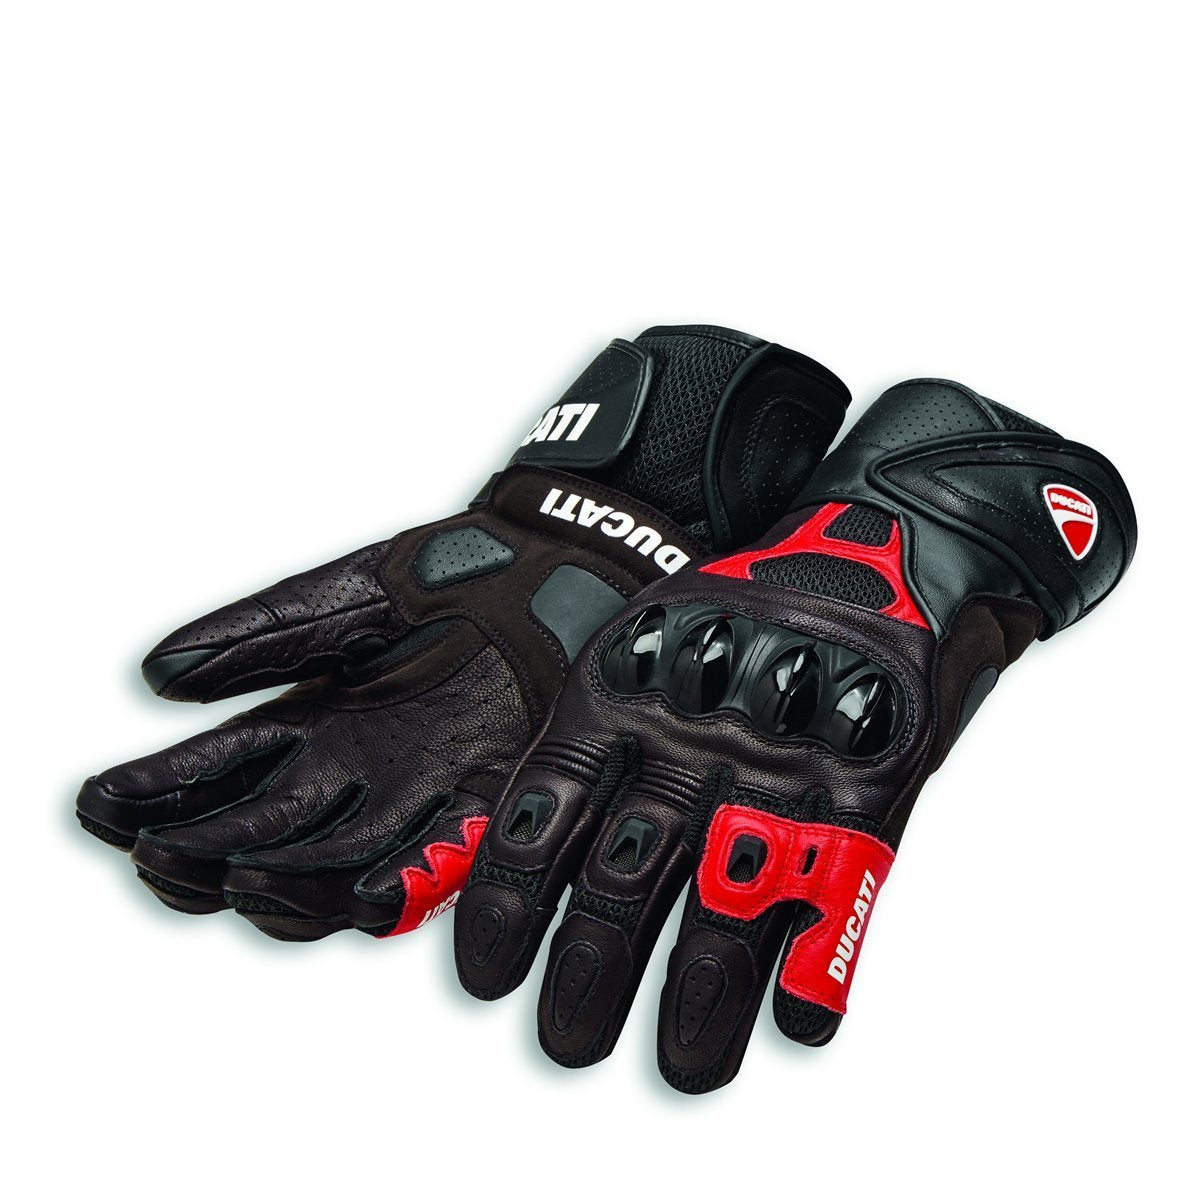 Ducati Speed Air C1 Gloves